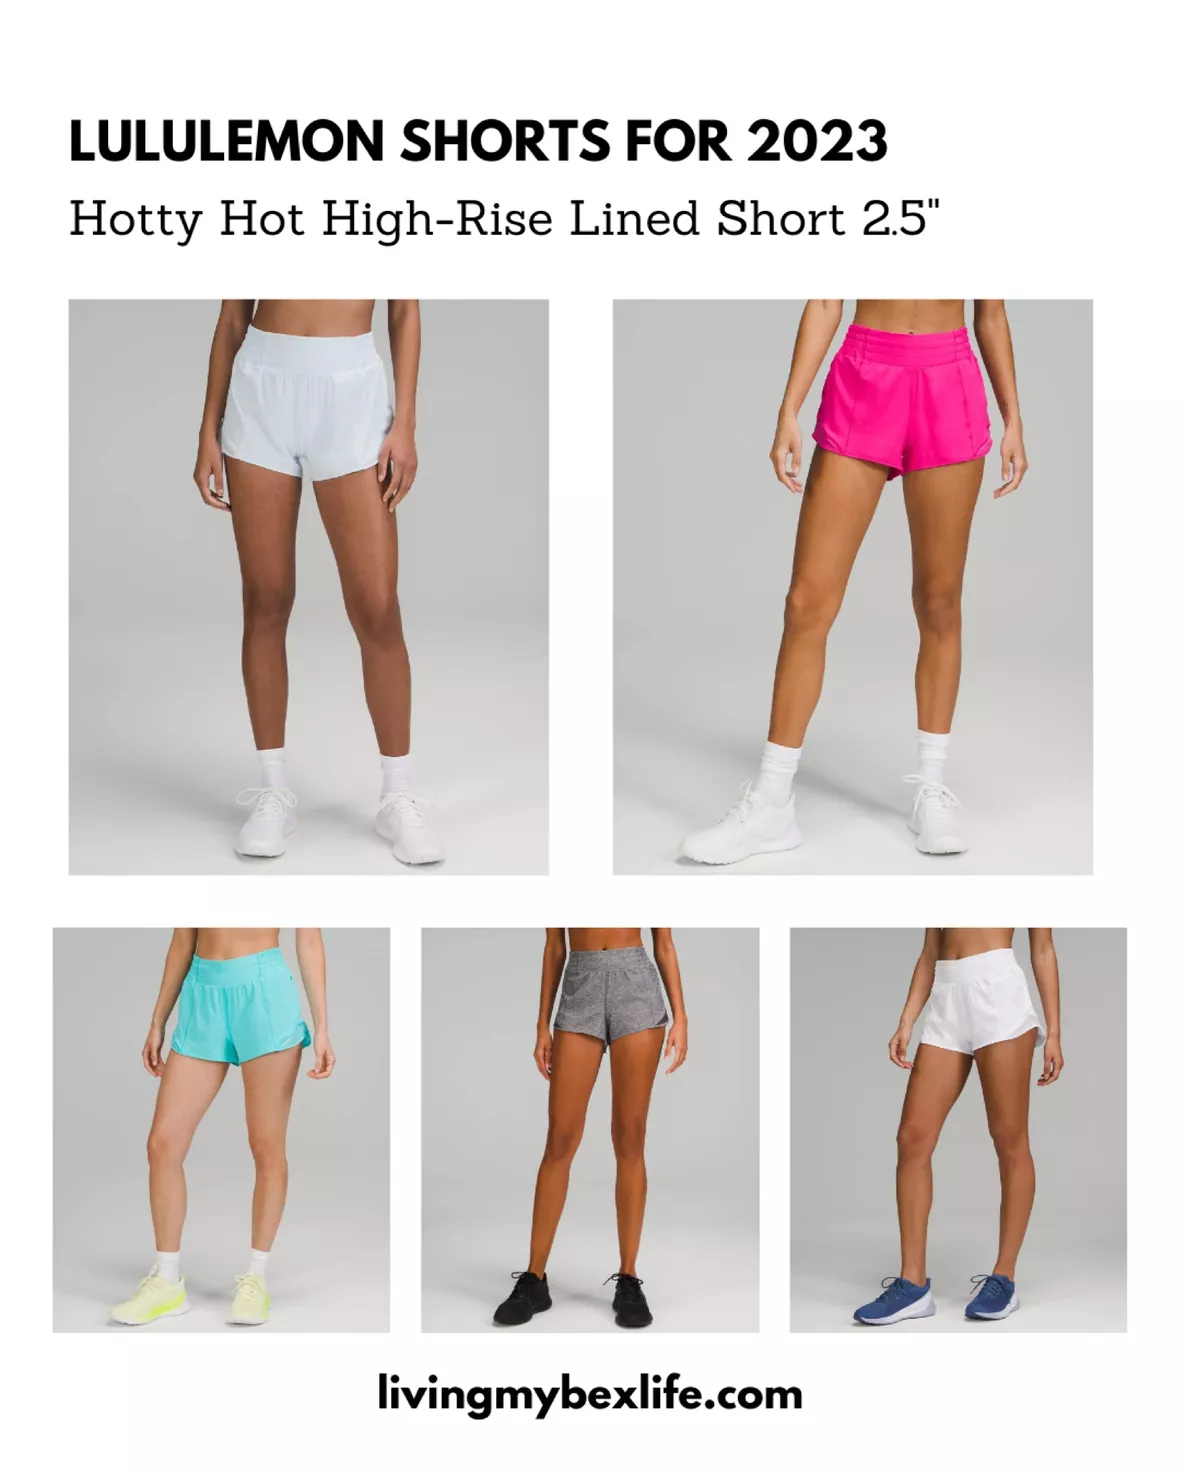 Lululemon athletica Hotty Hot Low-Rise Lined Short 2.5, Women's Shorts